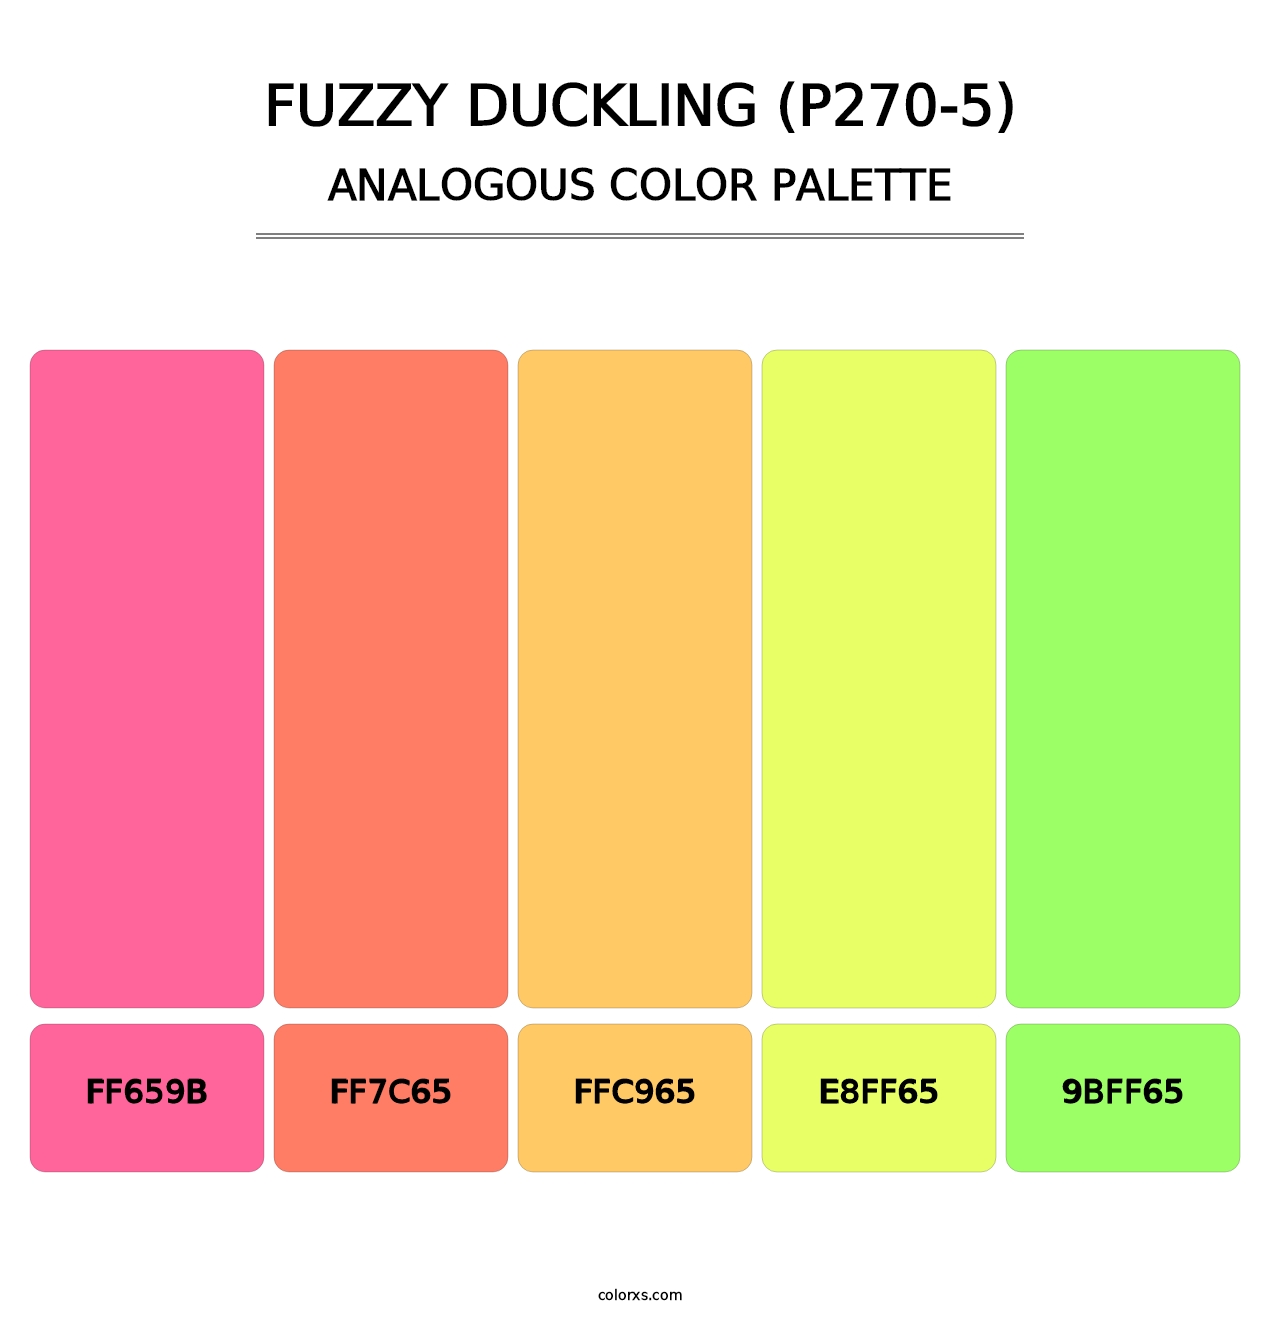 Fuzzy Duckling (P270-5) - Analogous Color Palette